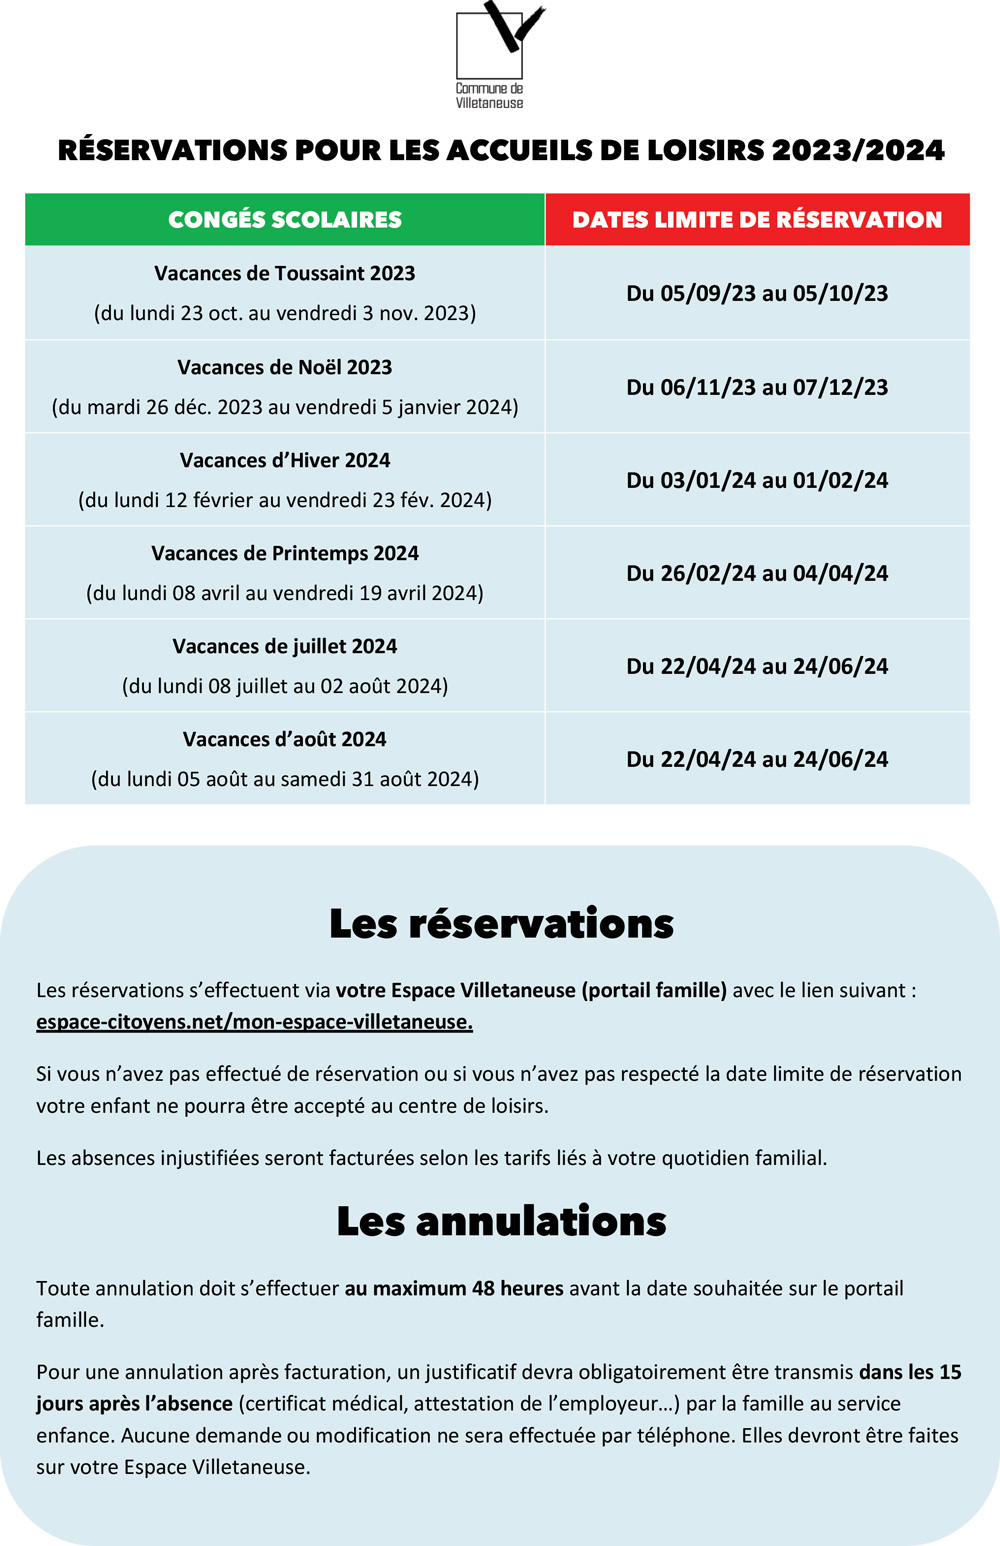 villetaneuse_date_reservations_accueils_de_loisirs_2023_2024_apercu_web2